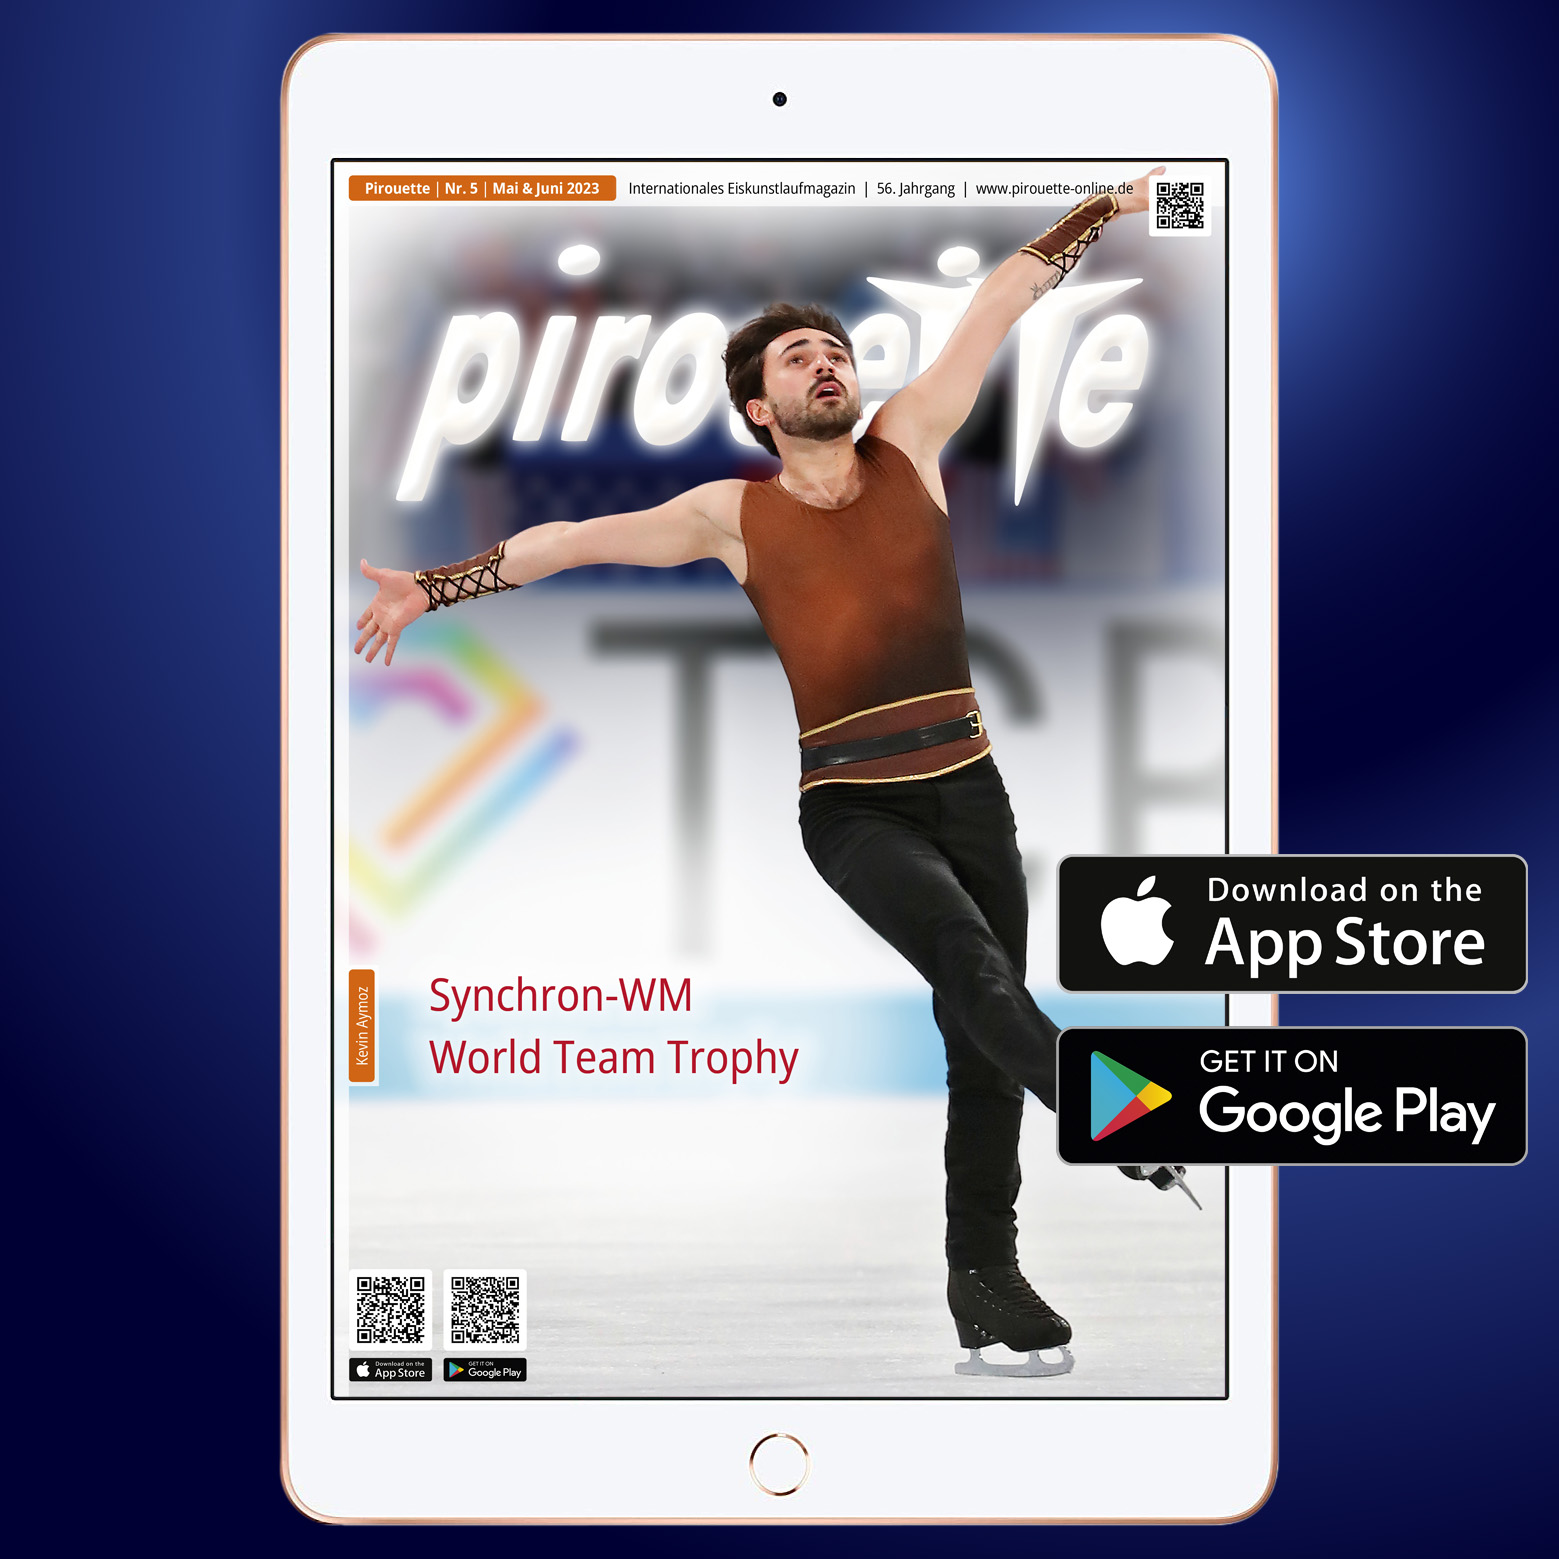 Die aktuelle Pirouette-App mit Kevin Aymoz